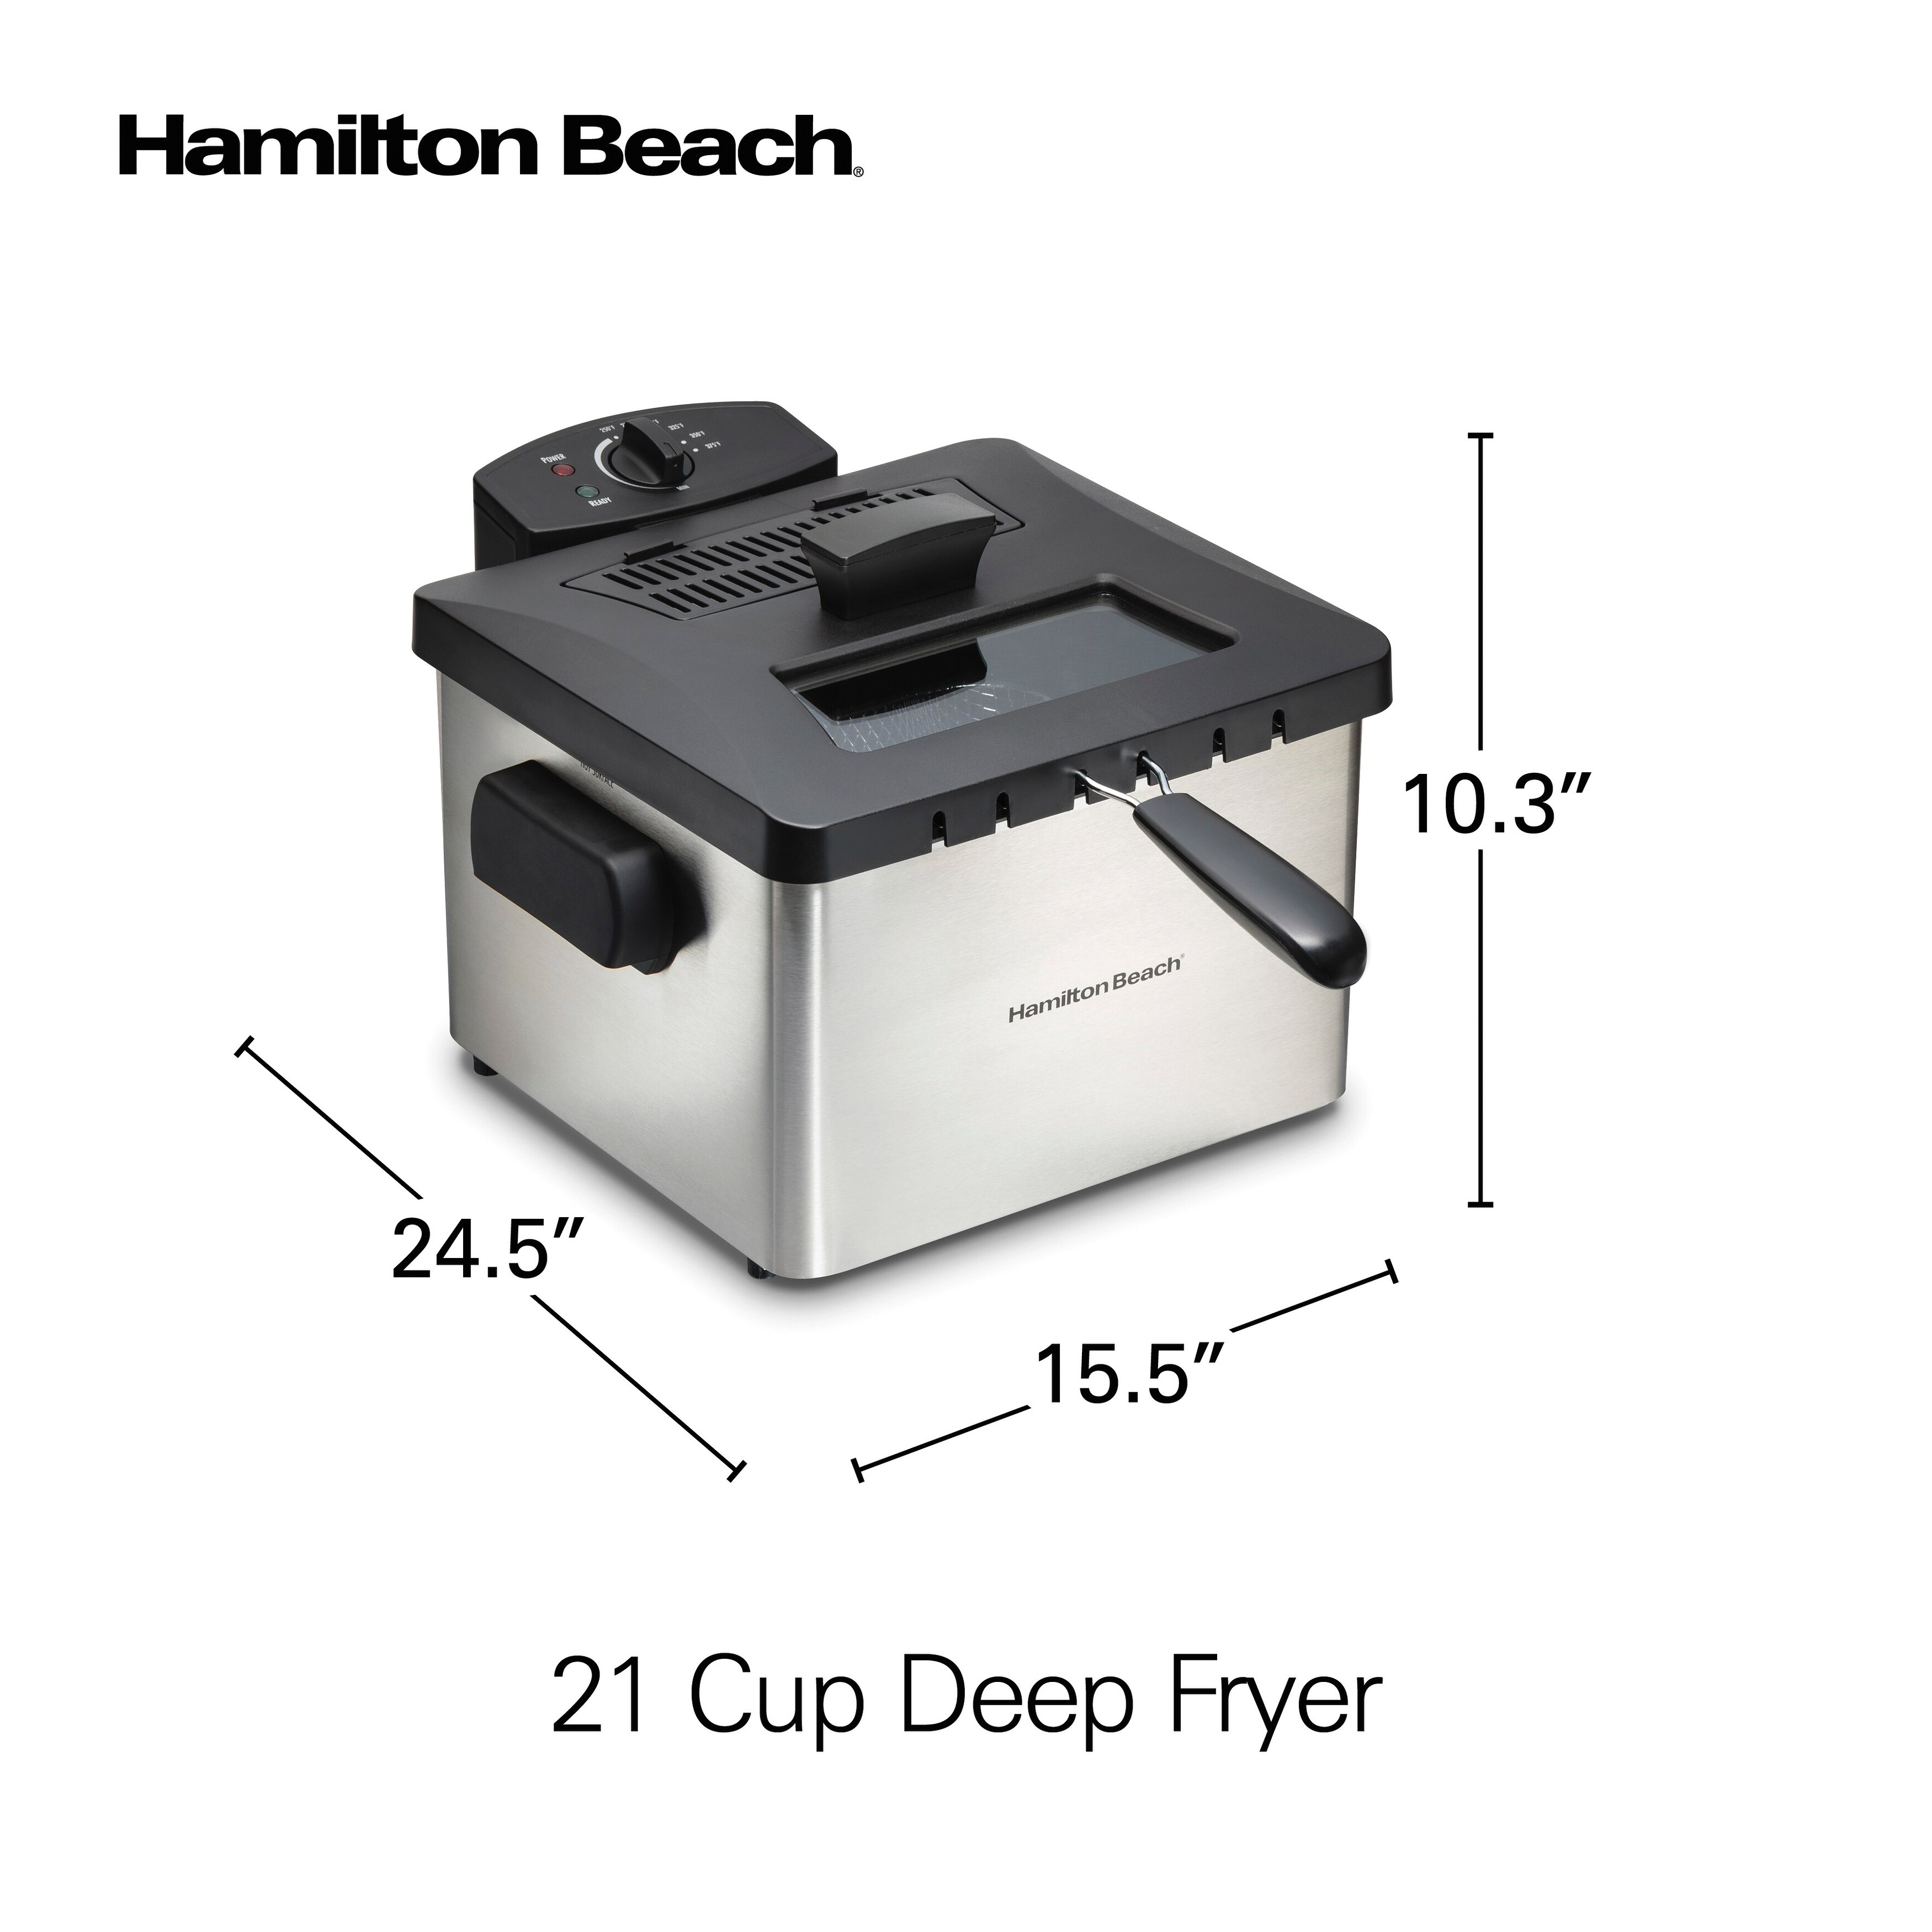 Hamilton Beach 21 Cup Deep Fryer - Bed Bath & Beyond - 34040973